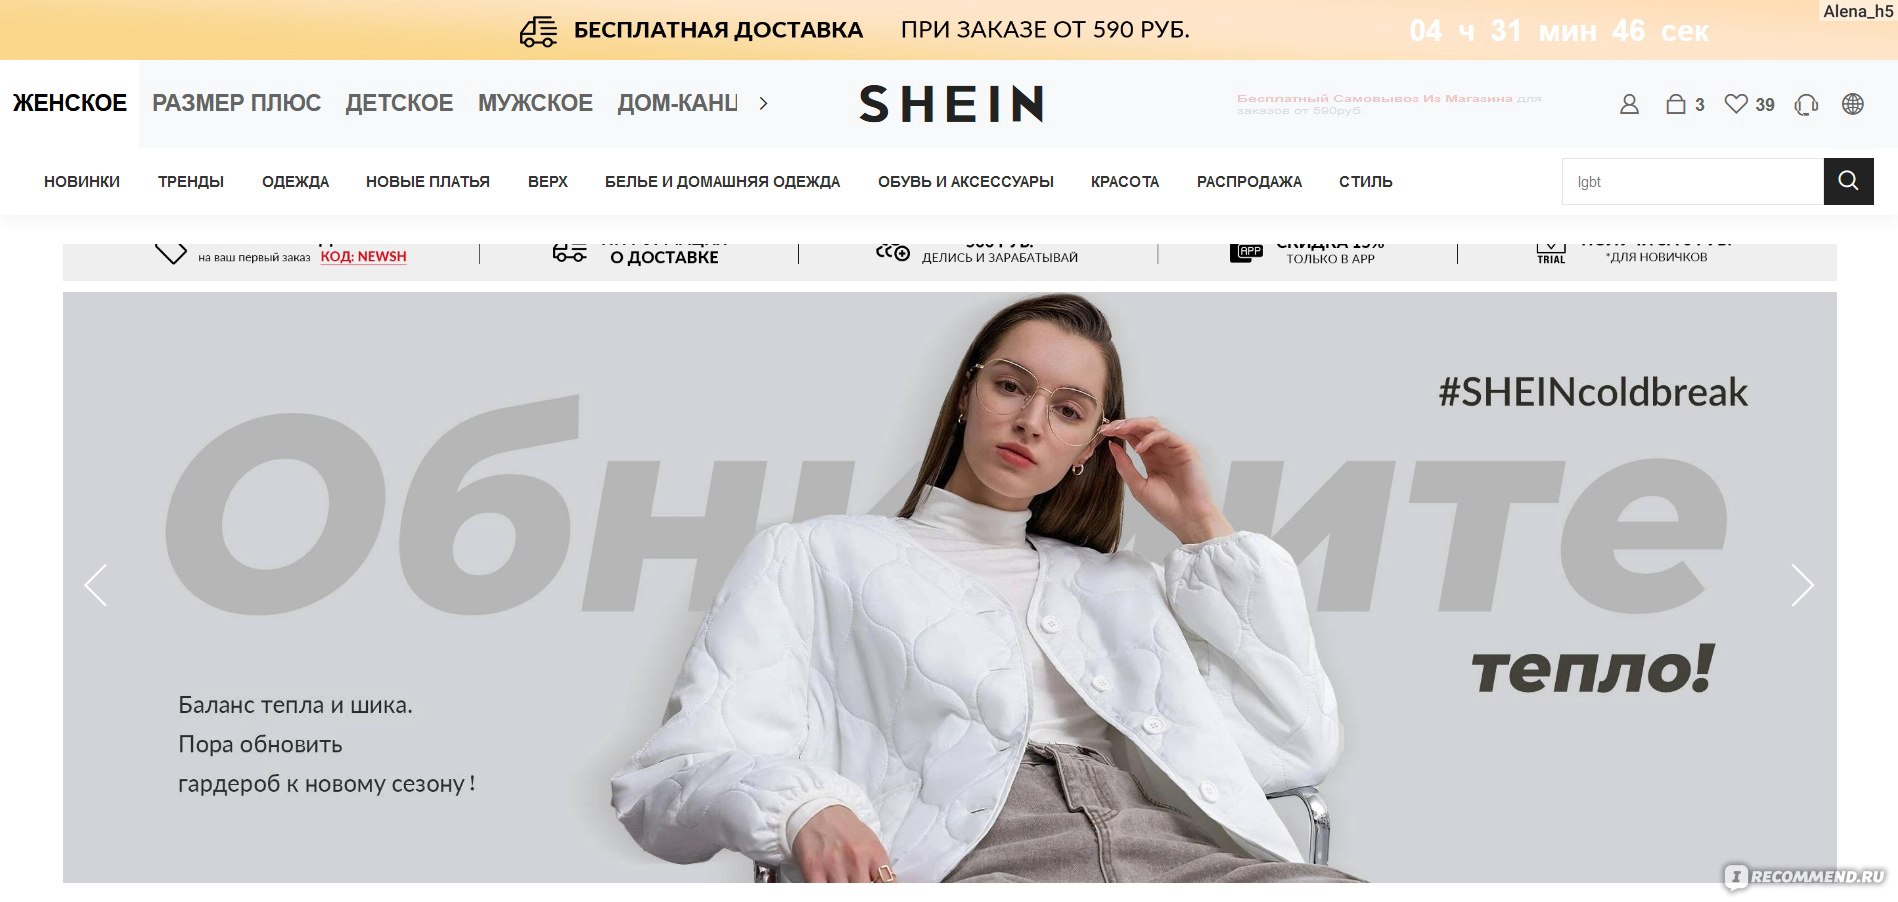 Сайт шеин интернет магазин на русском. SHEIN интернет магазин. Шеин интернет магазин одежды. Интернет магазины по типу SHEIN. SHEIN отзывы.